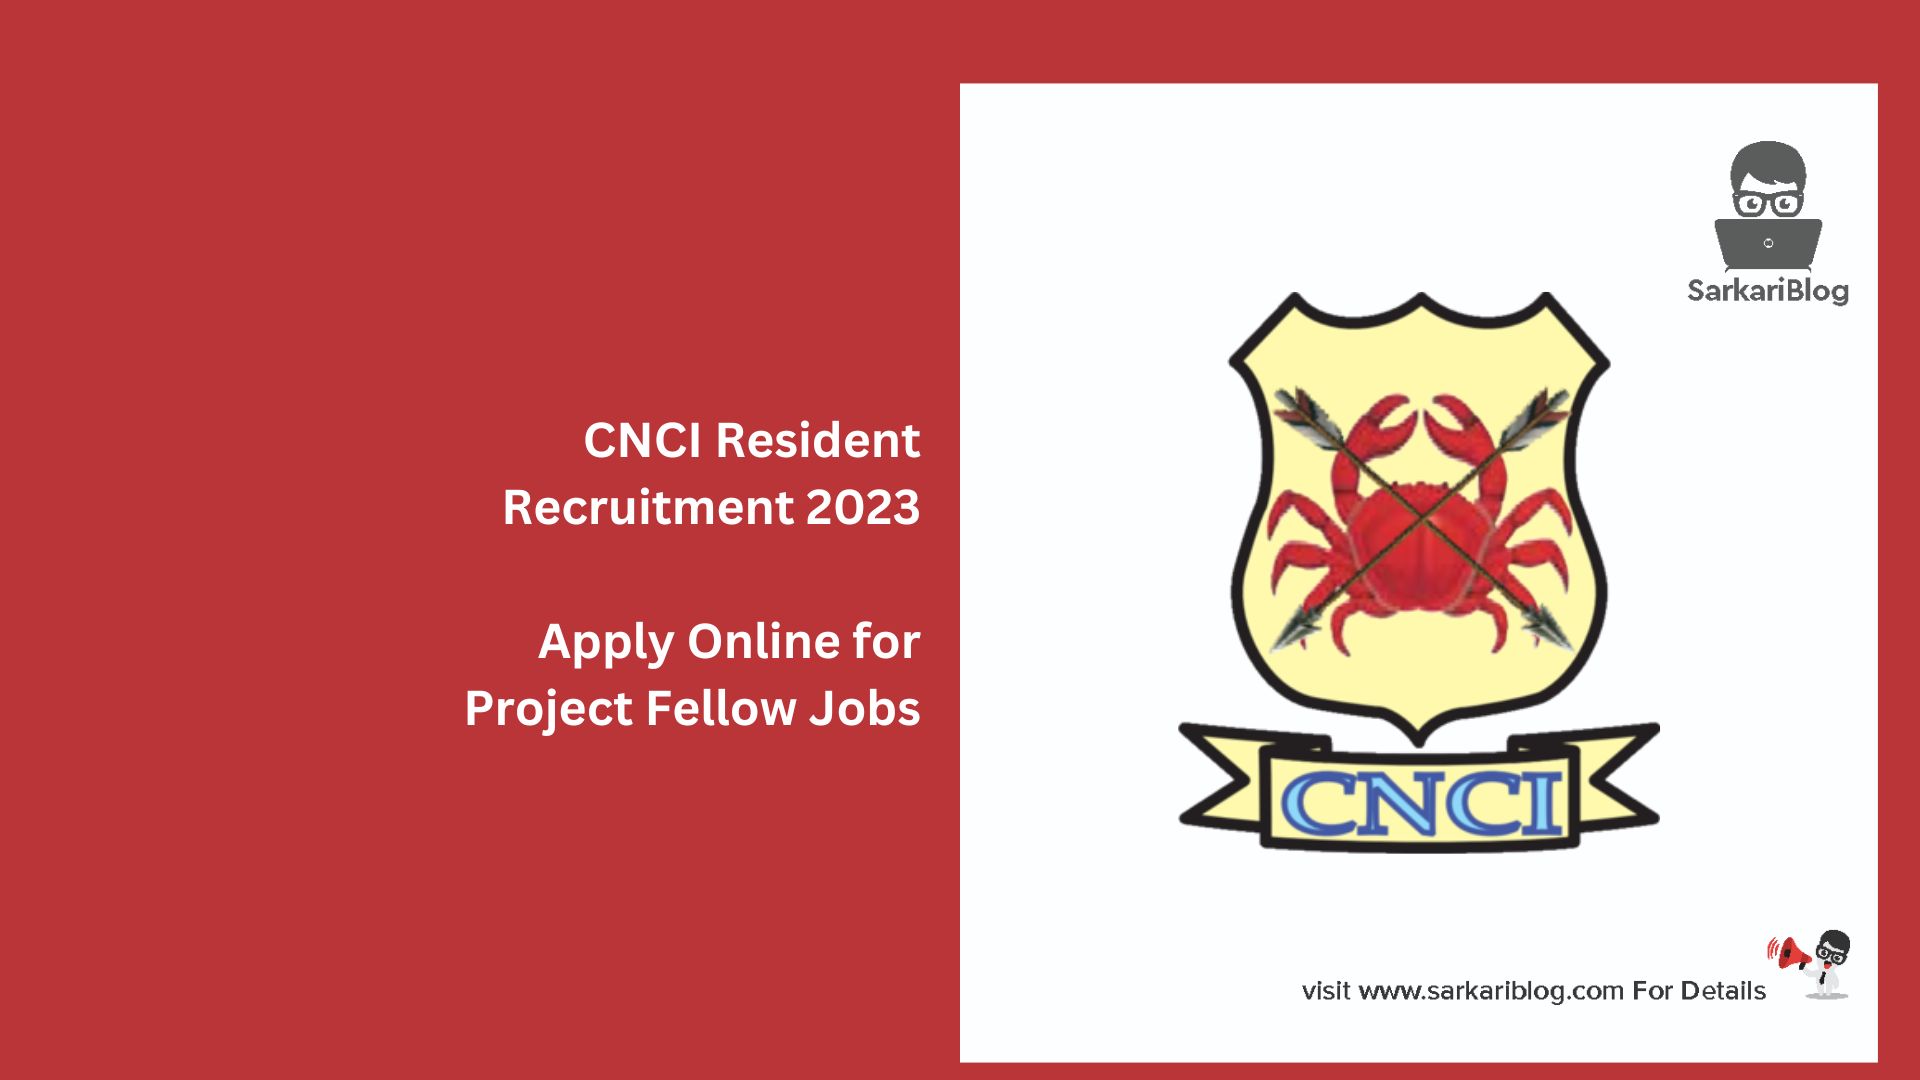 CNCI Resident Recruitment 2023